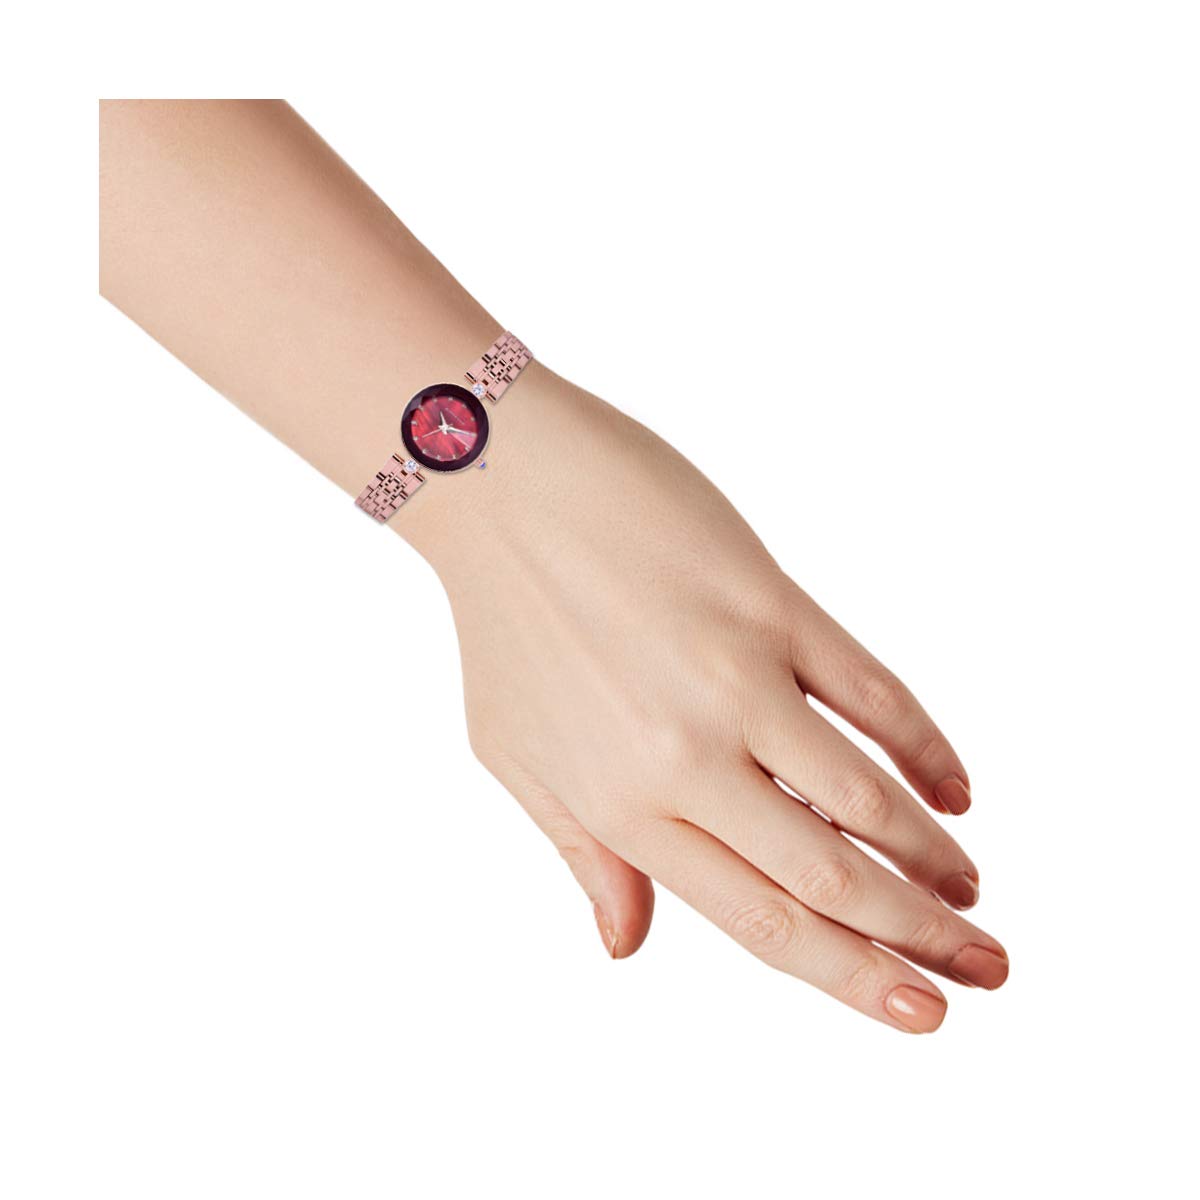 Giordano Eleganza Collection Round Analog Watch for Women, Diamond-Set with Metal Strap Ladies Water Resistant Wrist Watch - GZ-60014